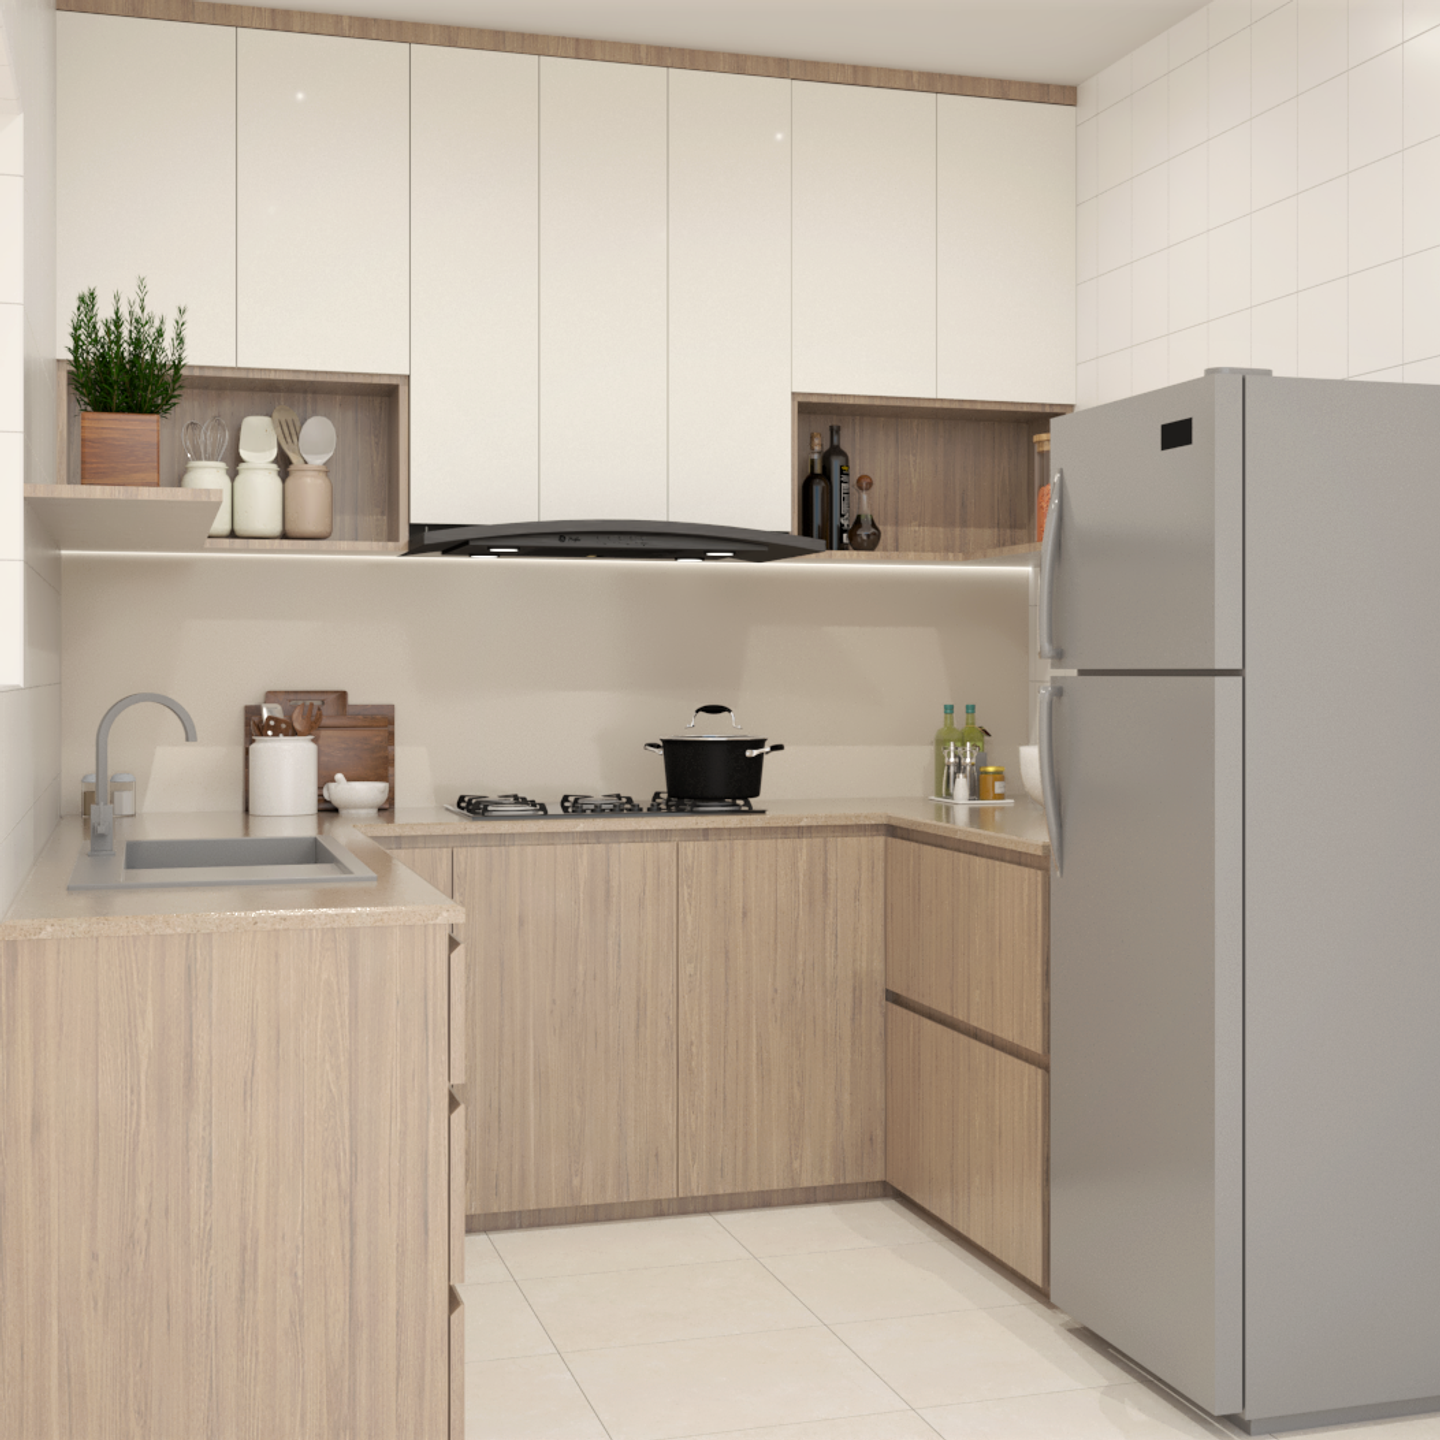 Simple Kitchen Design - Livspace